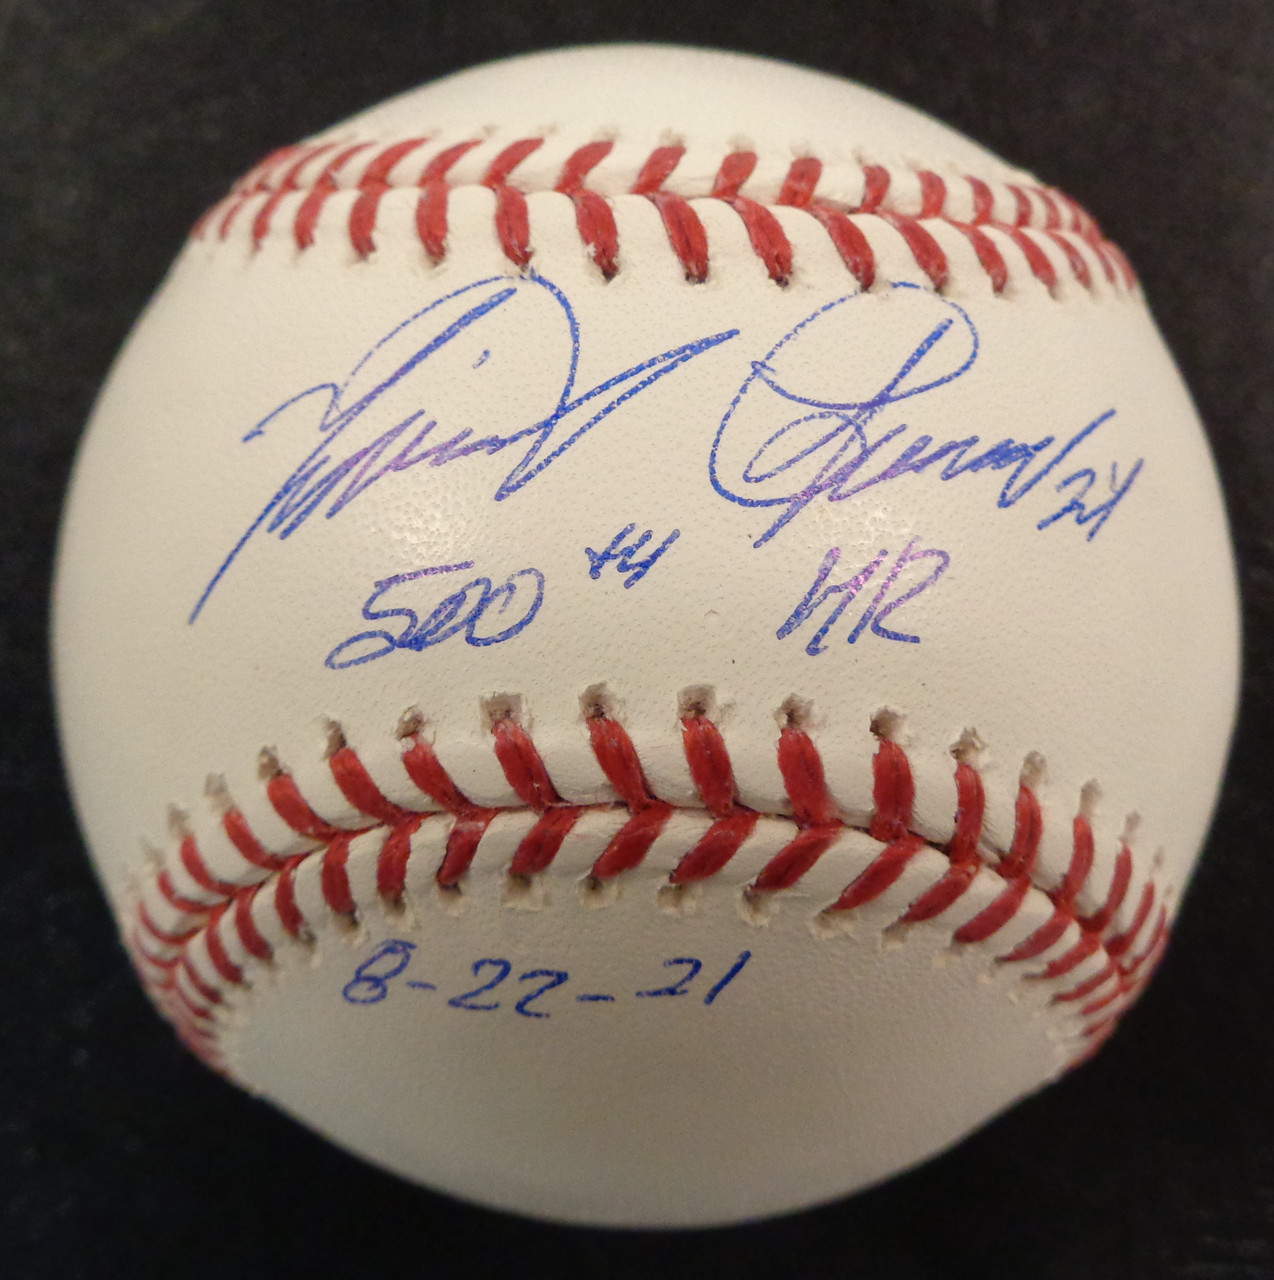 Miguel Cabrera Autographed Baseball - "500th HR 8-22-21" Inscription -  Detroit City Sports